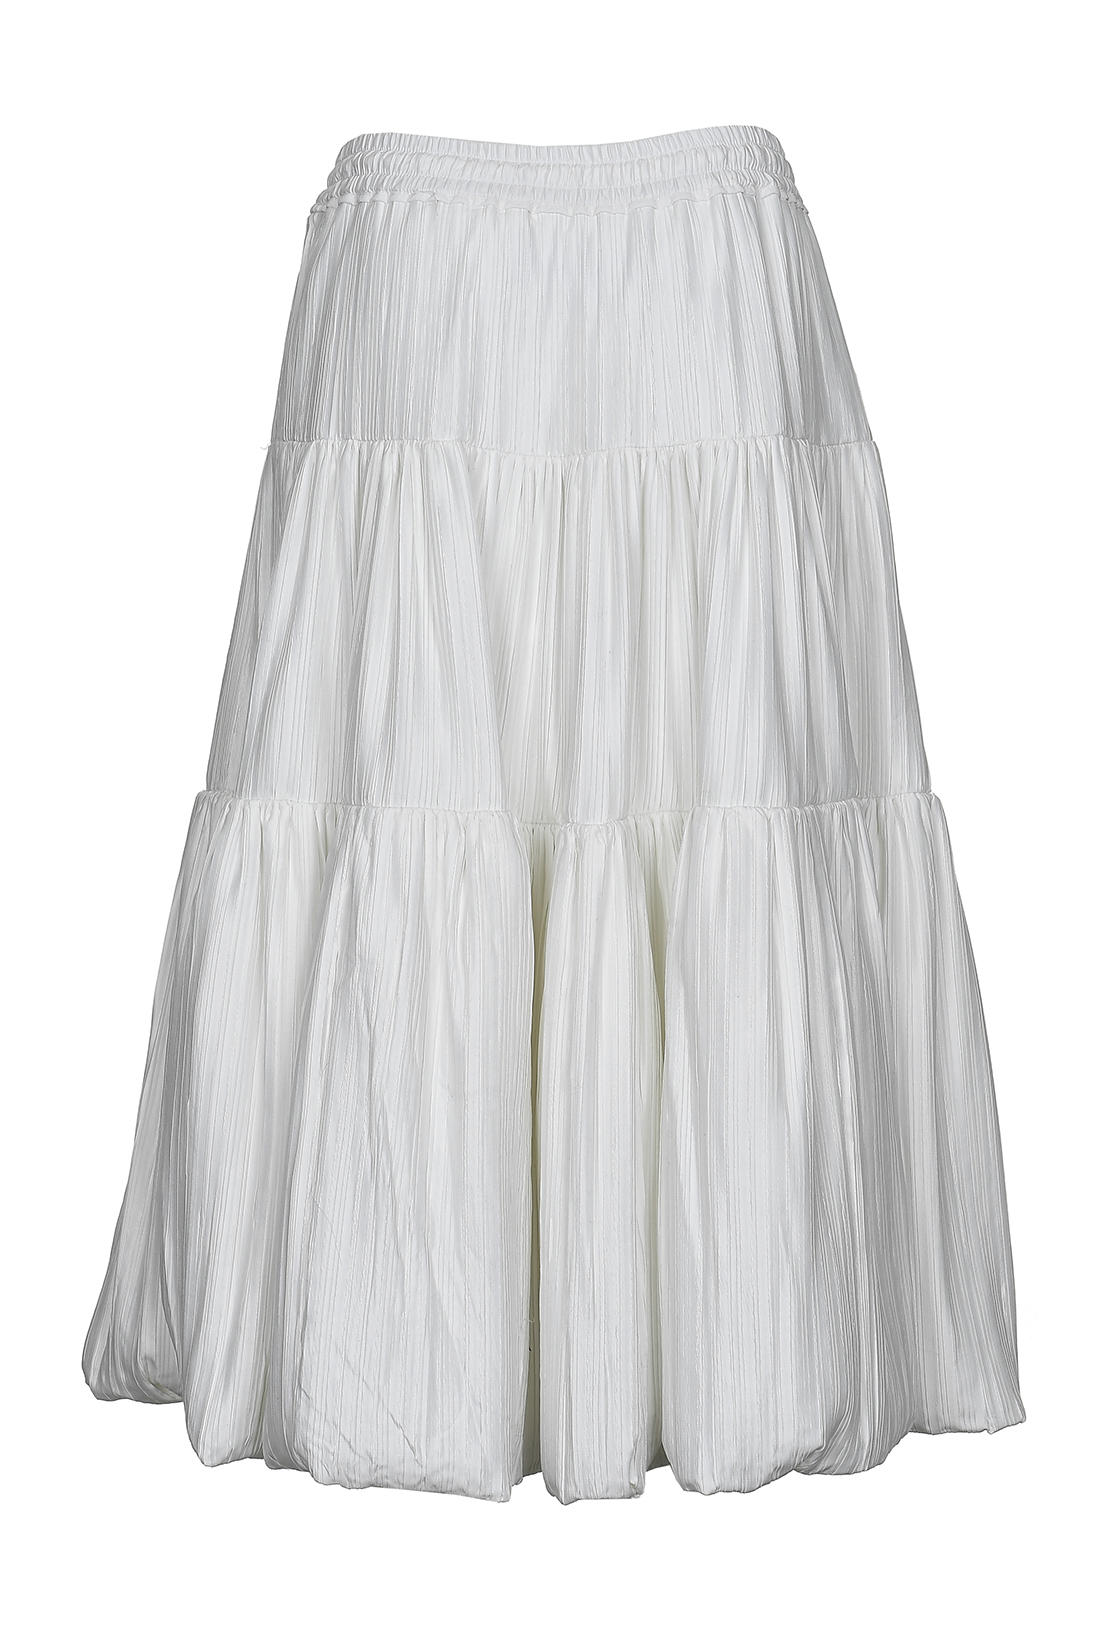 [SAMPLE SALE] Shirring Midi Skirt